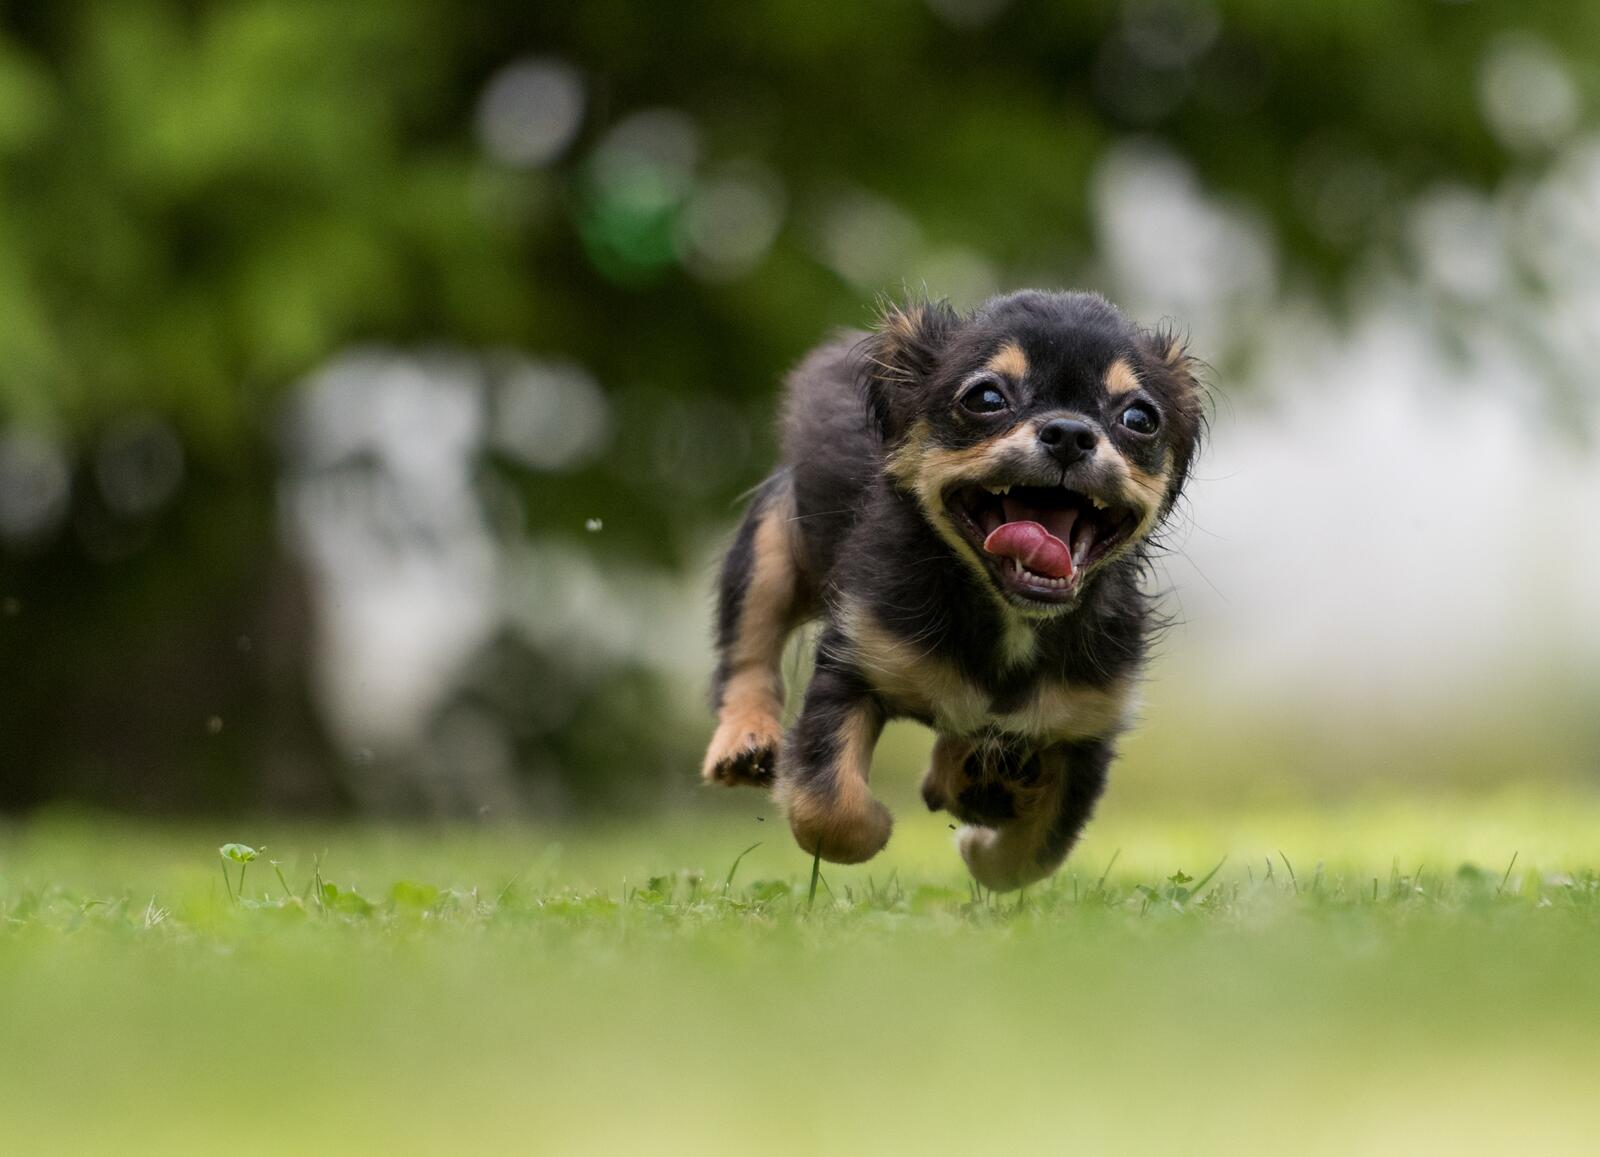 Free photo A happy puppy runs across a green lawn